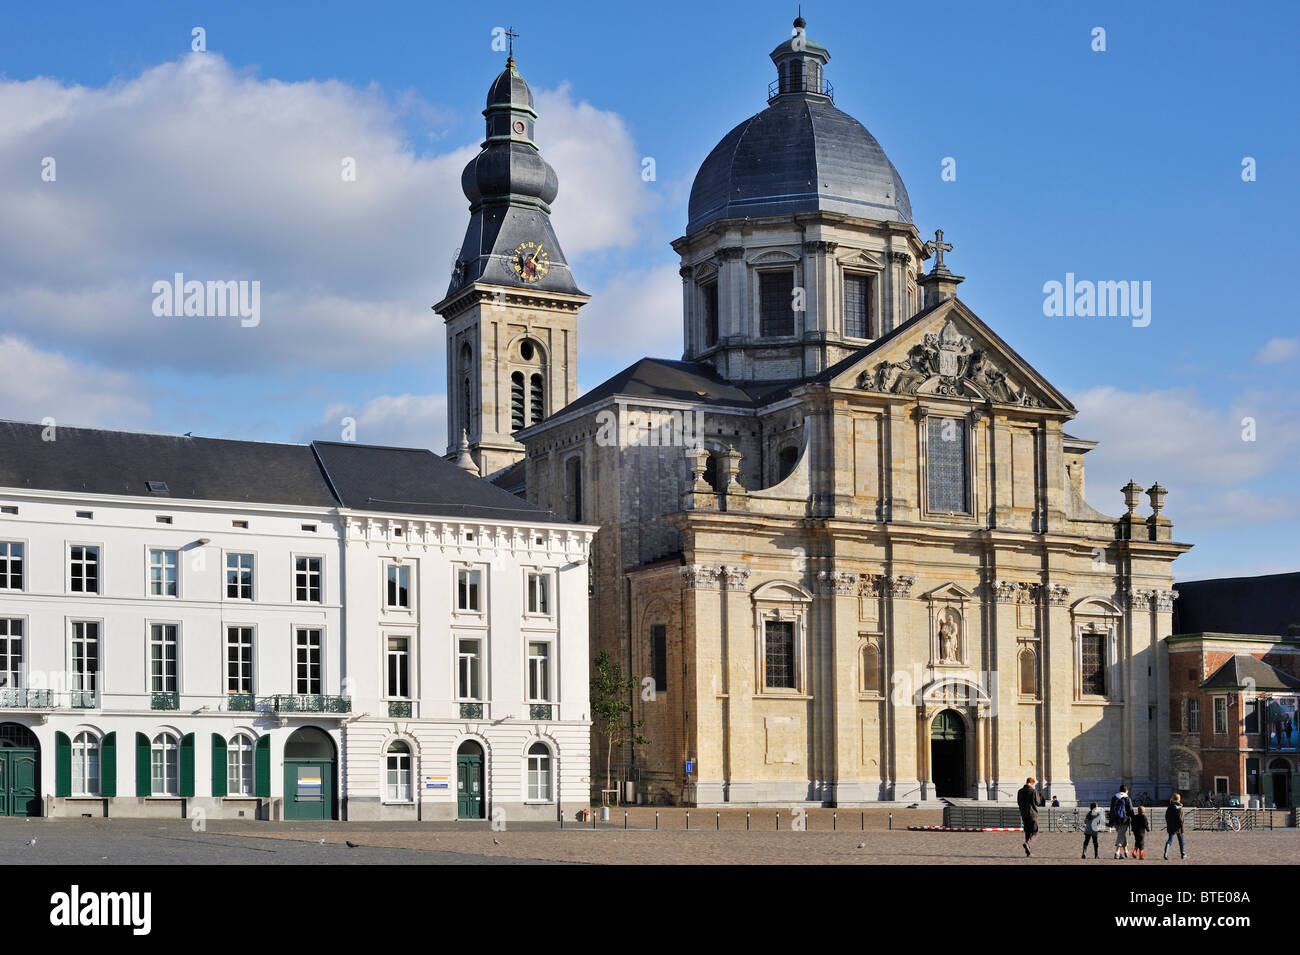 Saint Peters' church and abbey / Onze-Lieve-Vrouw-Sint-Pieterskerk in Ghent, Belgium Stock Photo